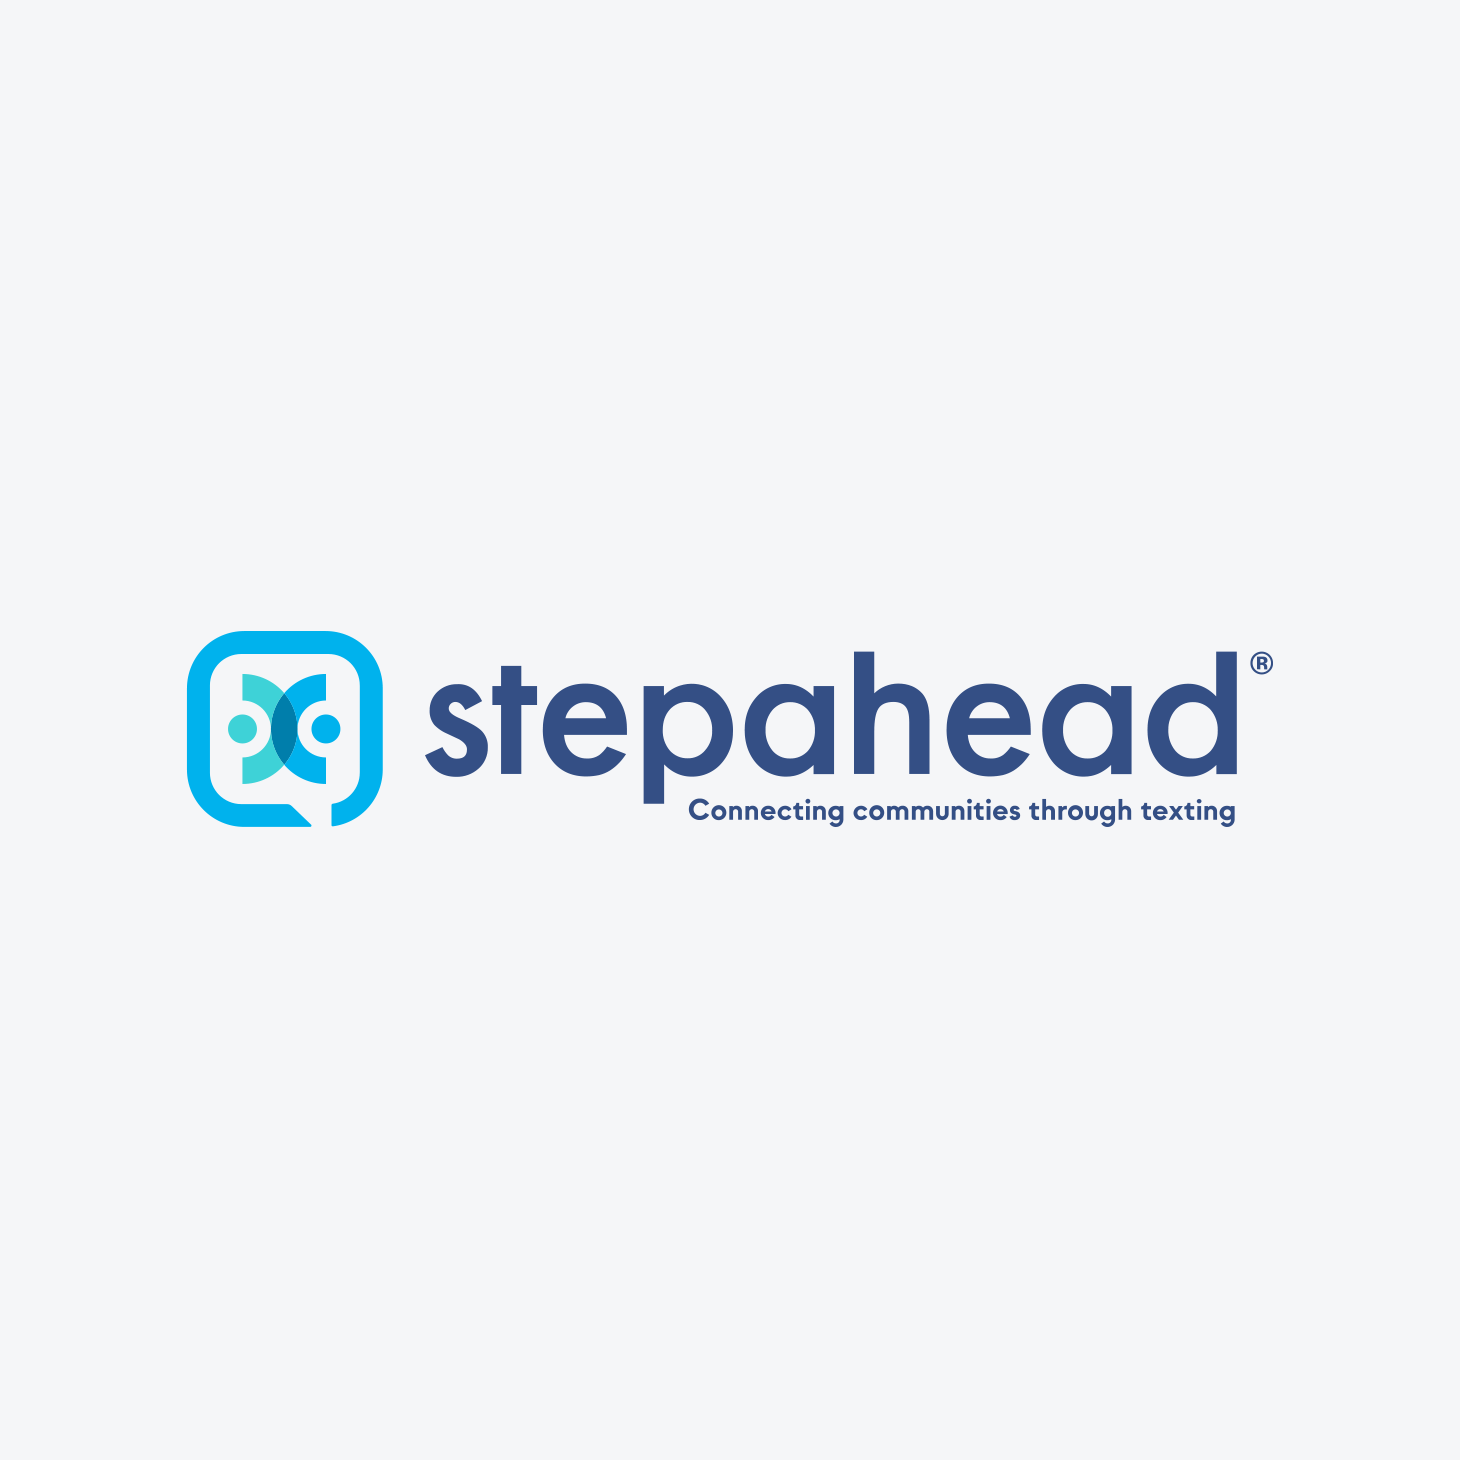 Logo design for Stepahead